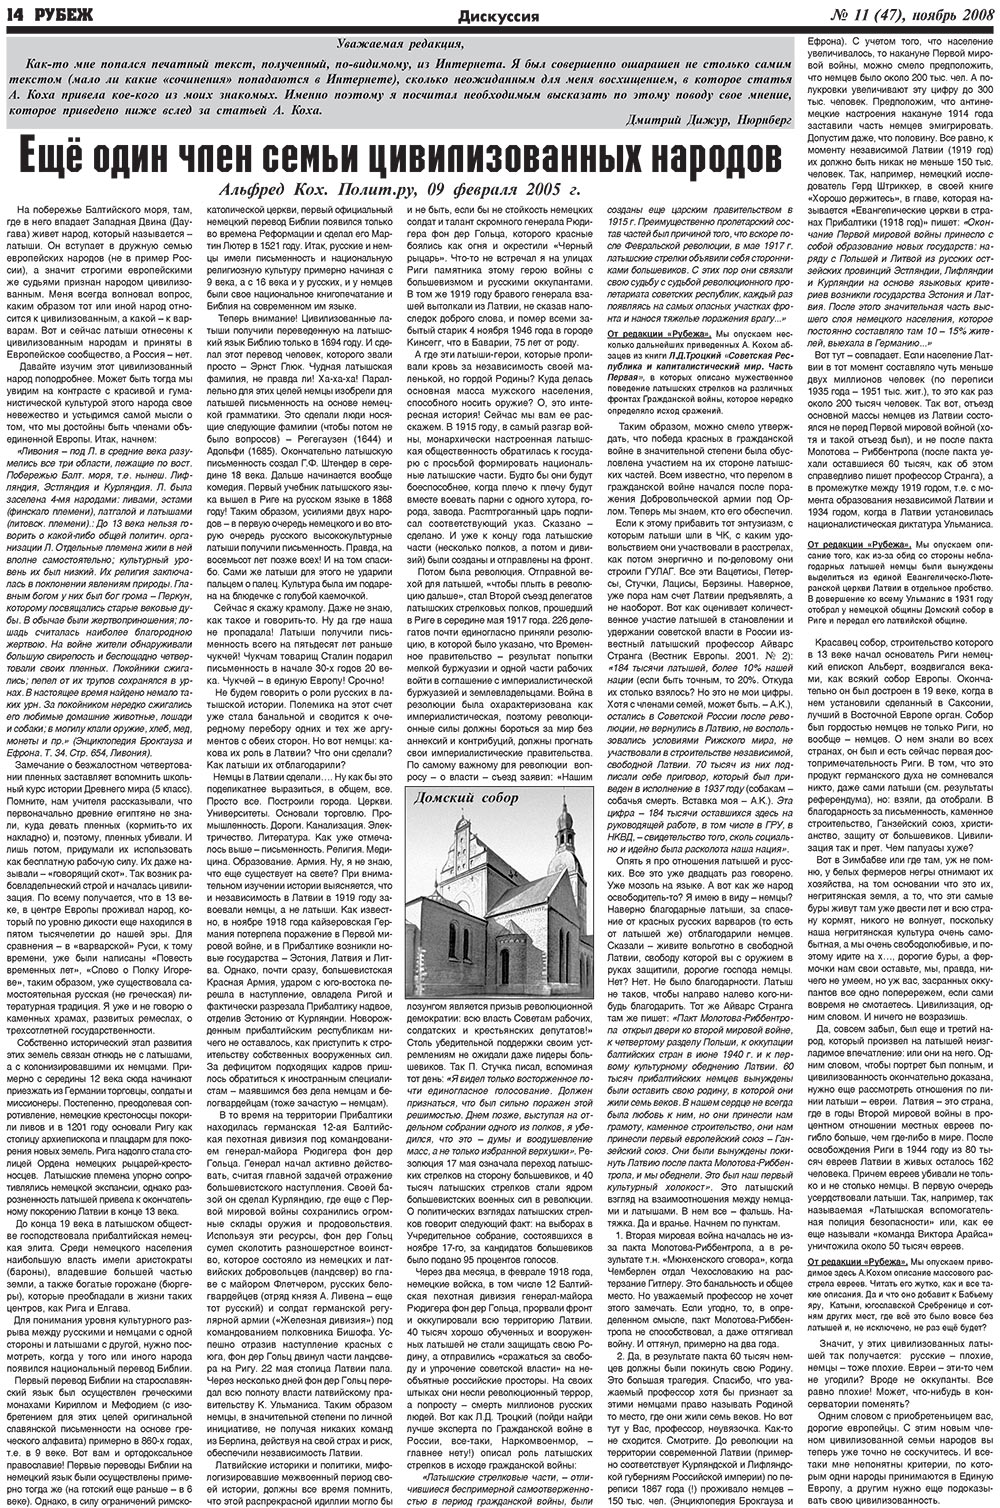 Рубеж, газета. 2008 №11 стр.14